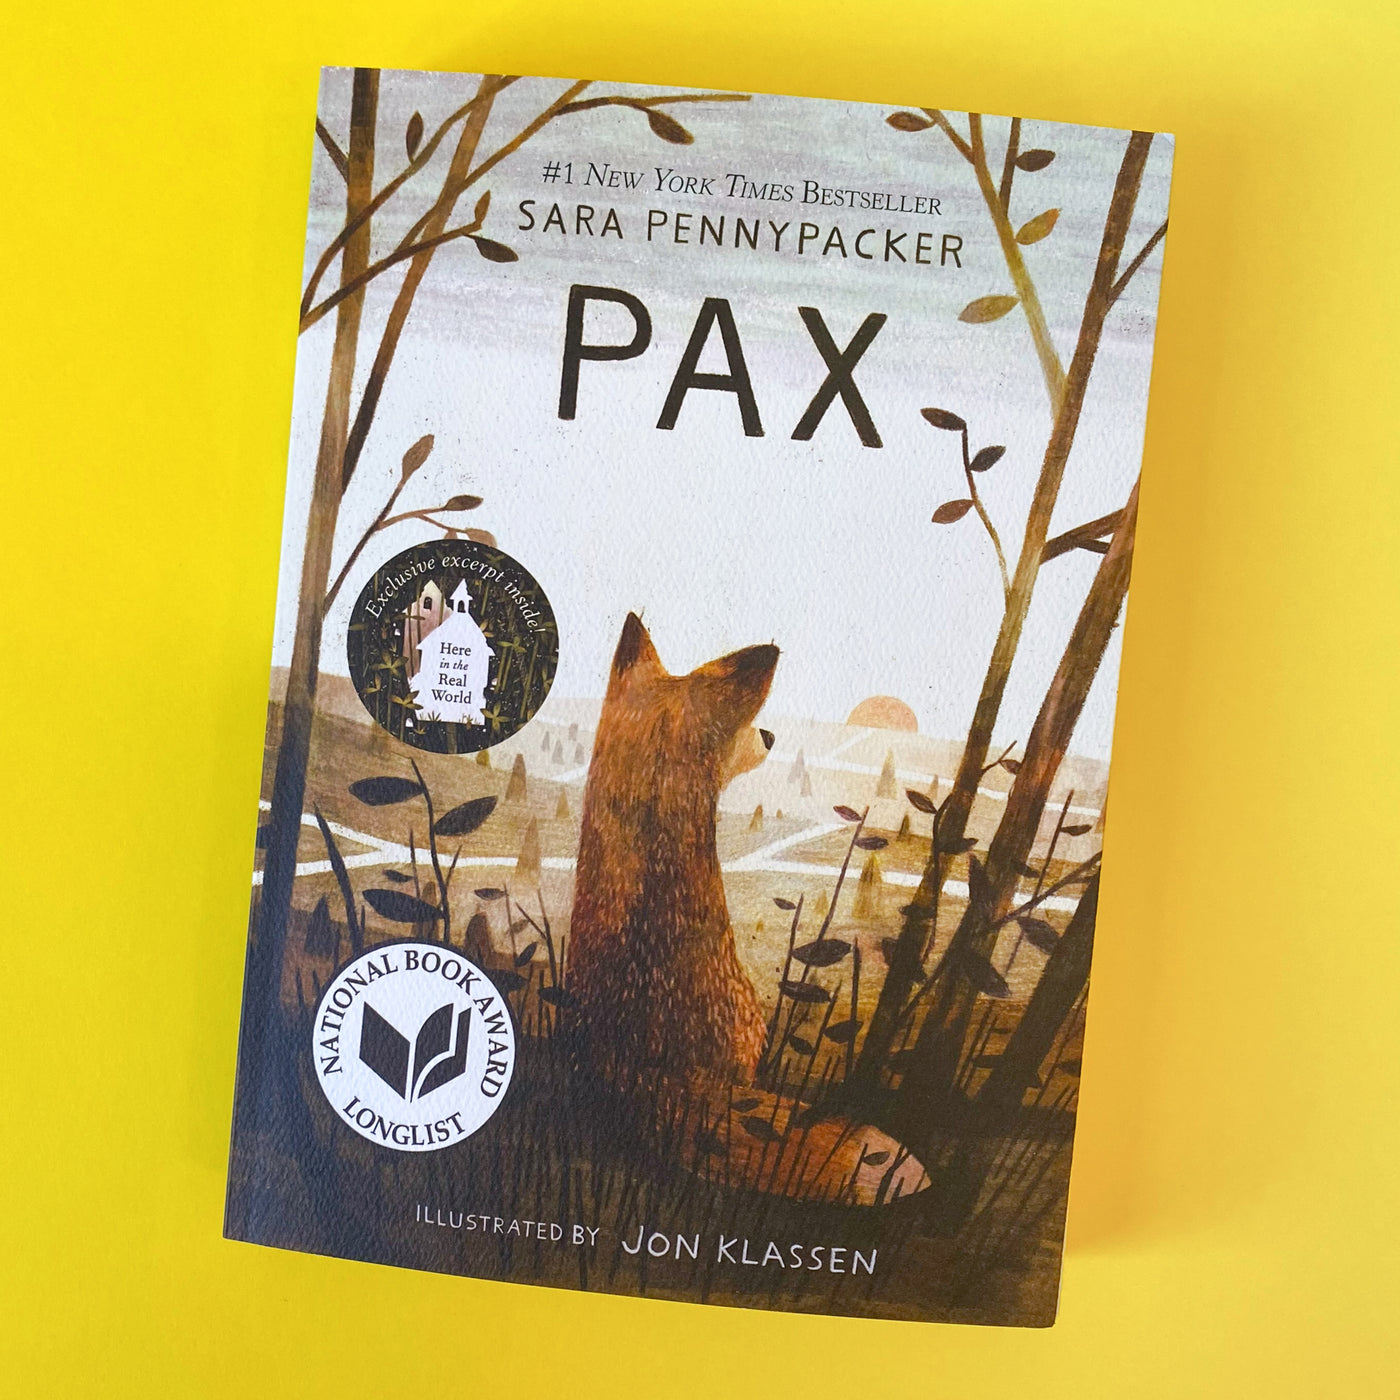 Pax by Sara Pennypacker and Jon Klassen